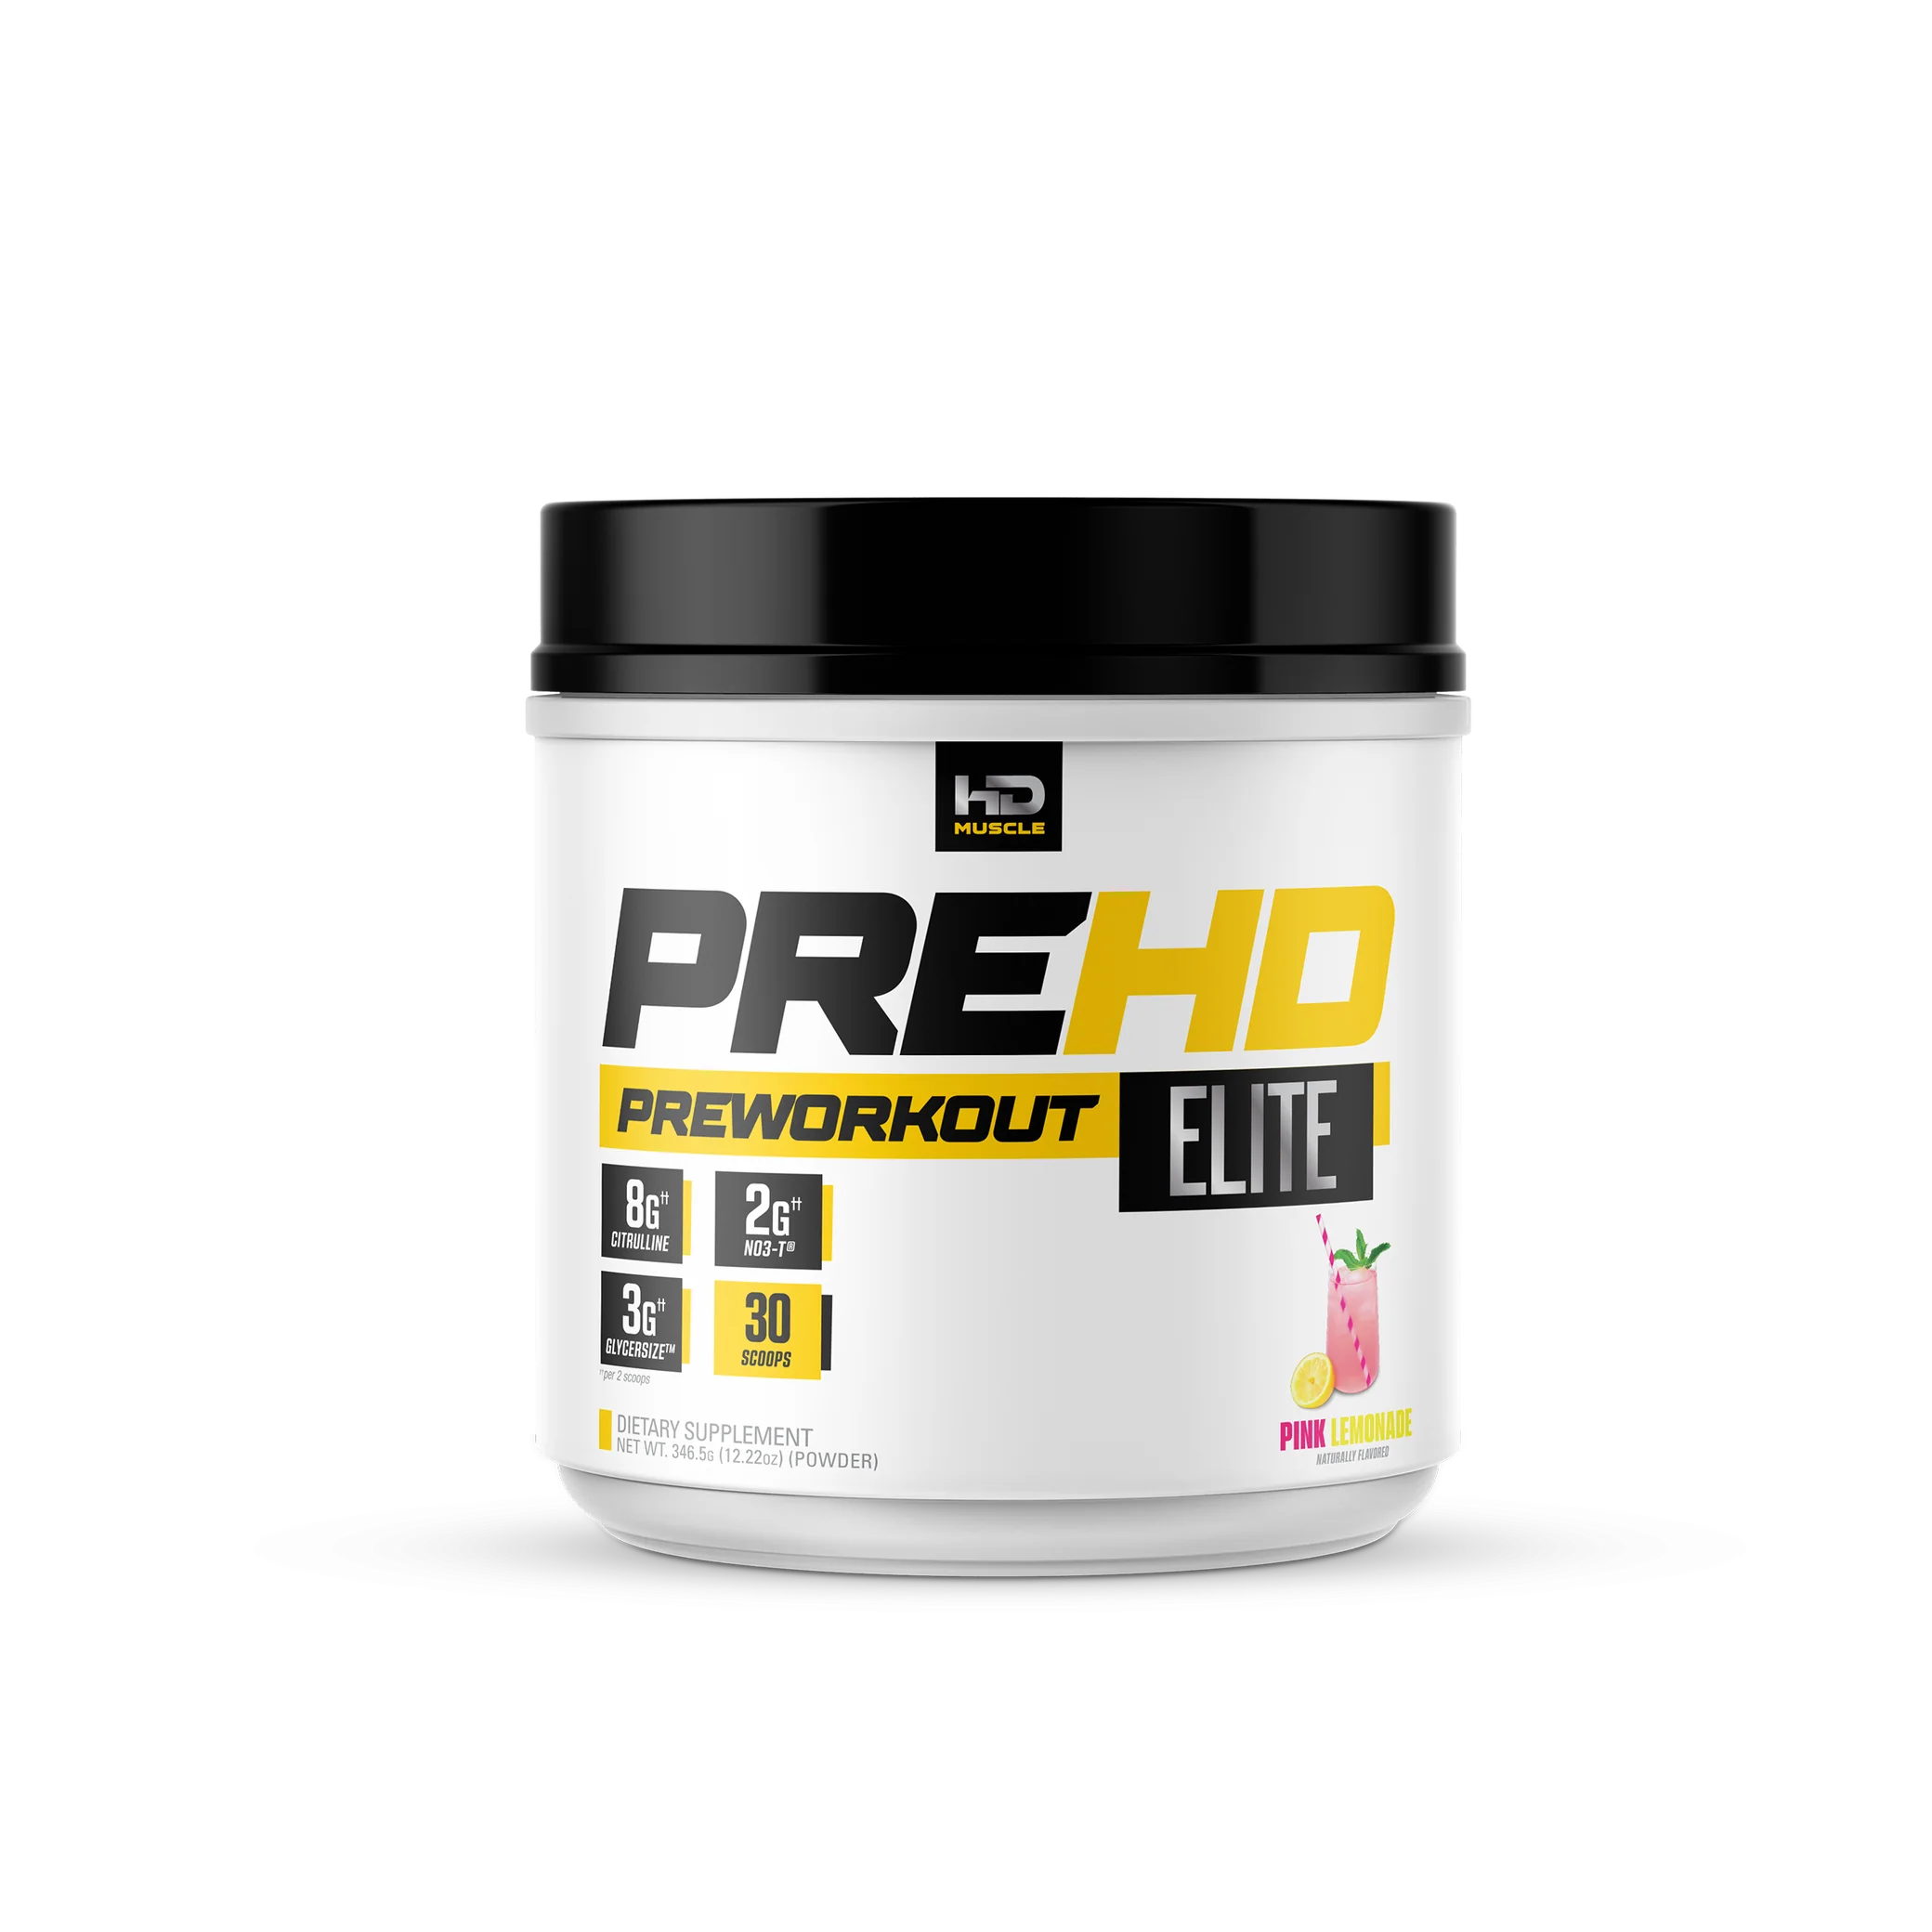 HD Muscle PreHD Elite Pre-Workout (No Caffeine) 30 Servings